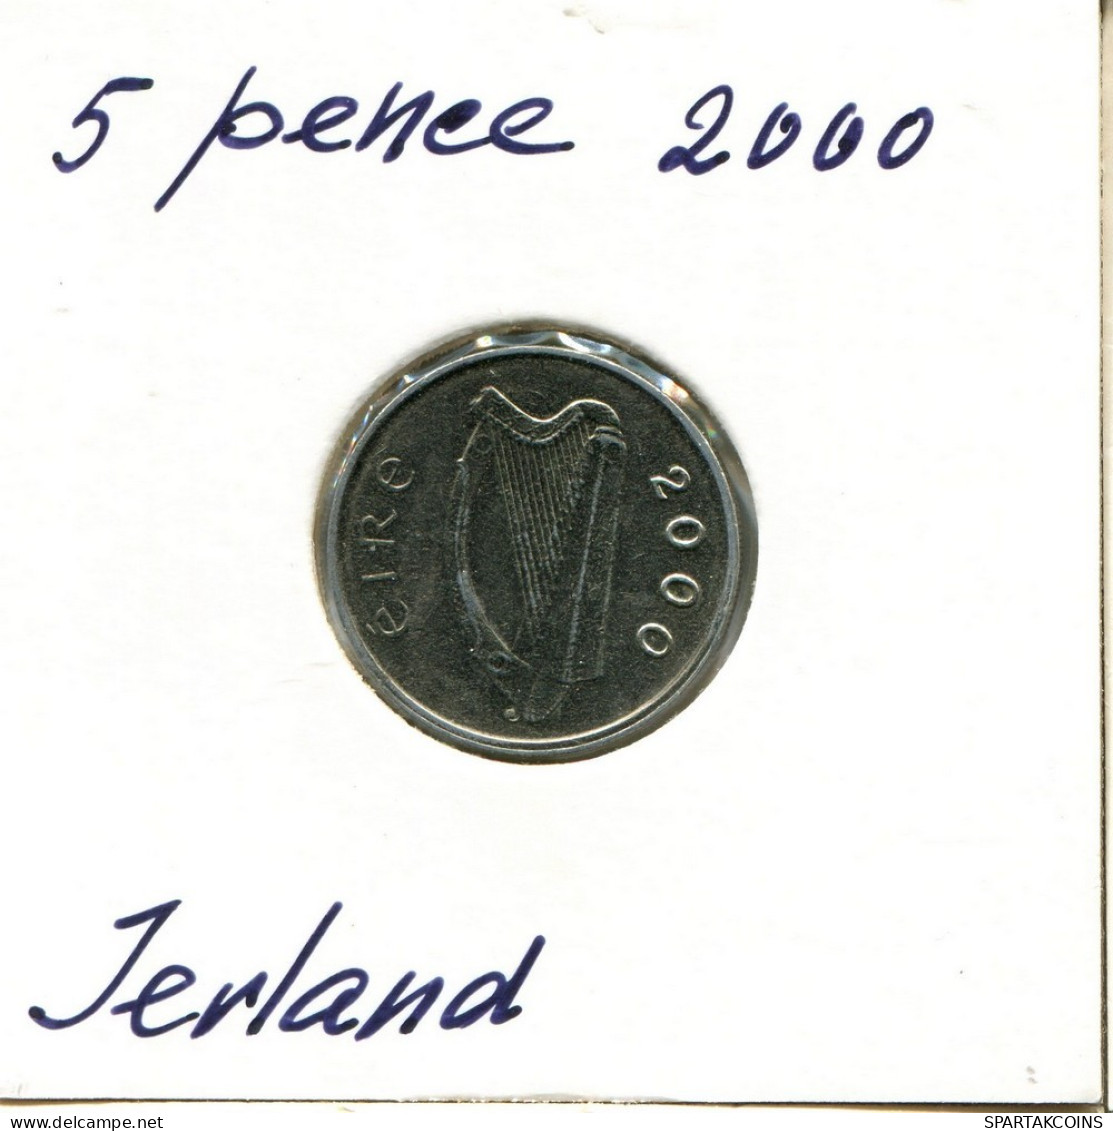 5 PENCE 2000 IRLAND IRELAND Münze #AY687.D.A - Irland